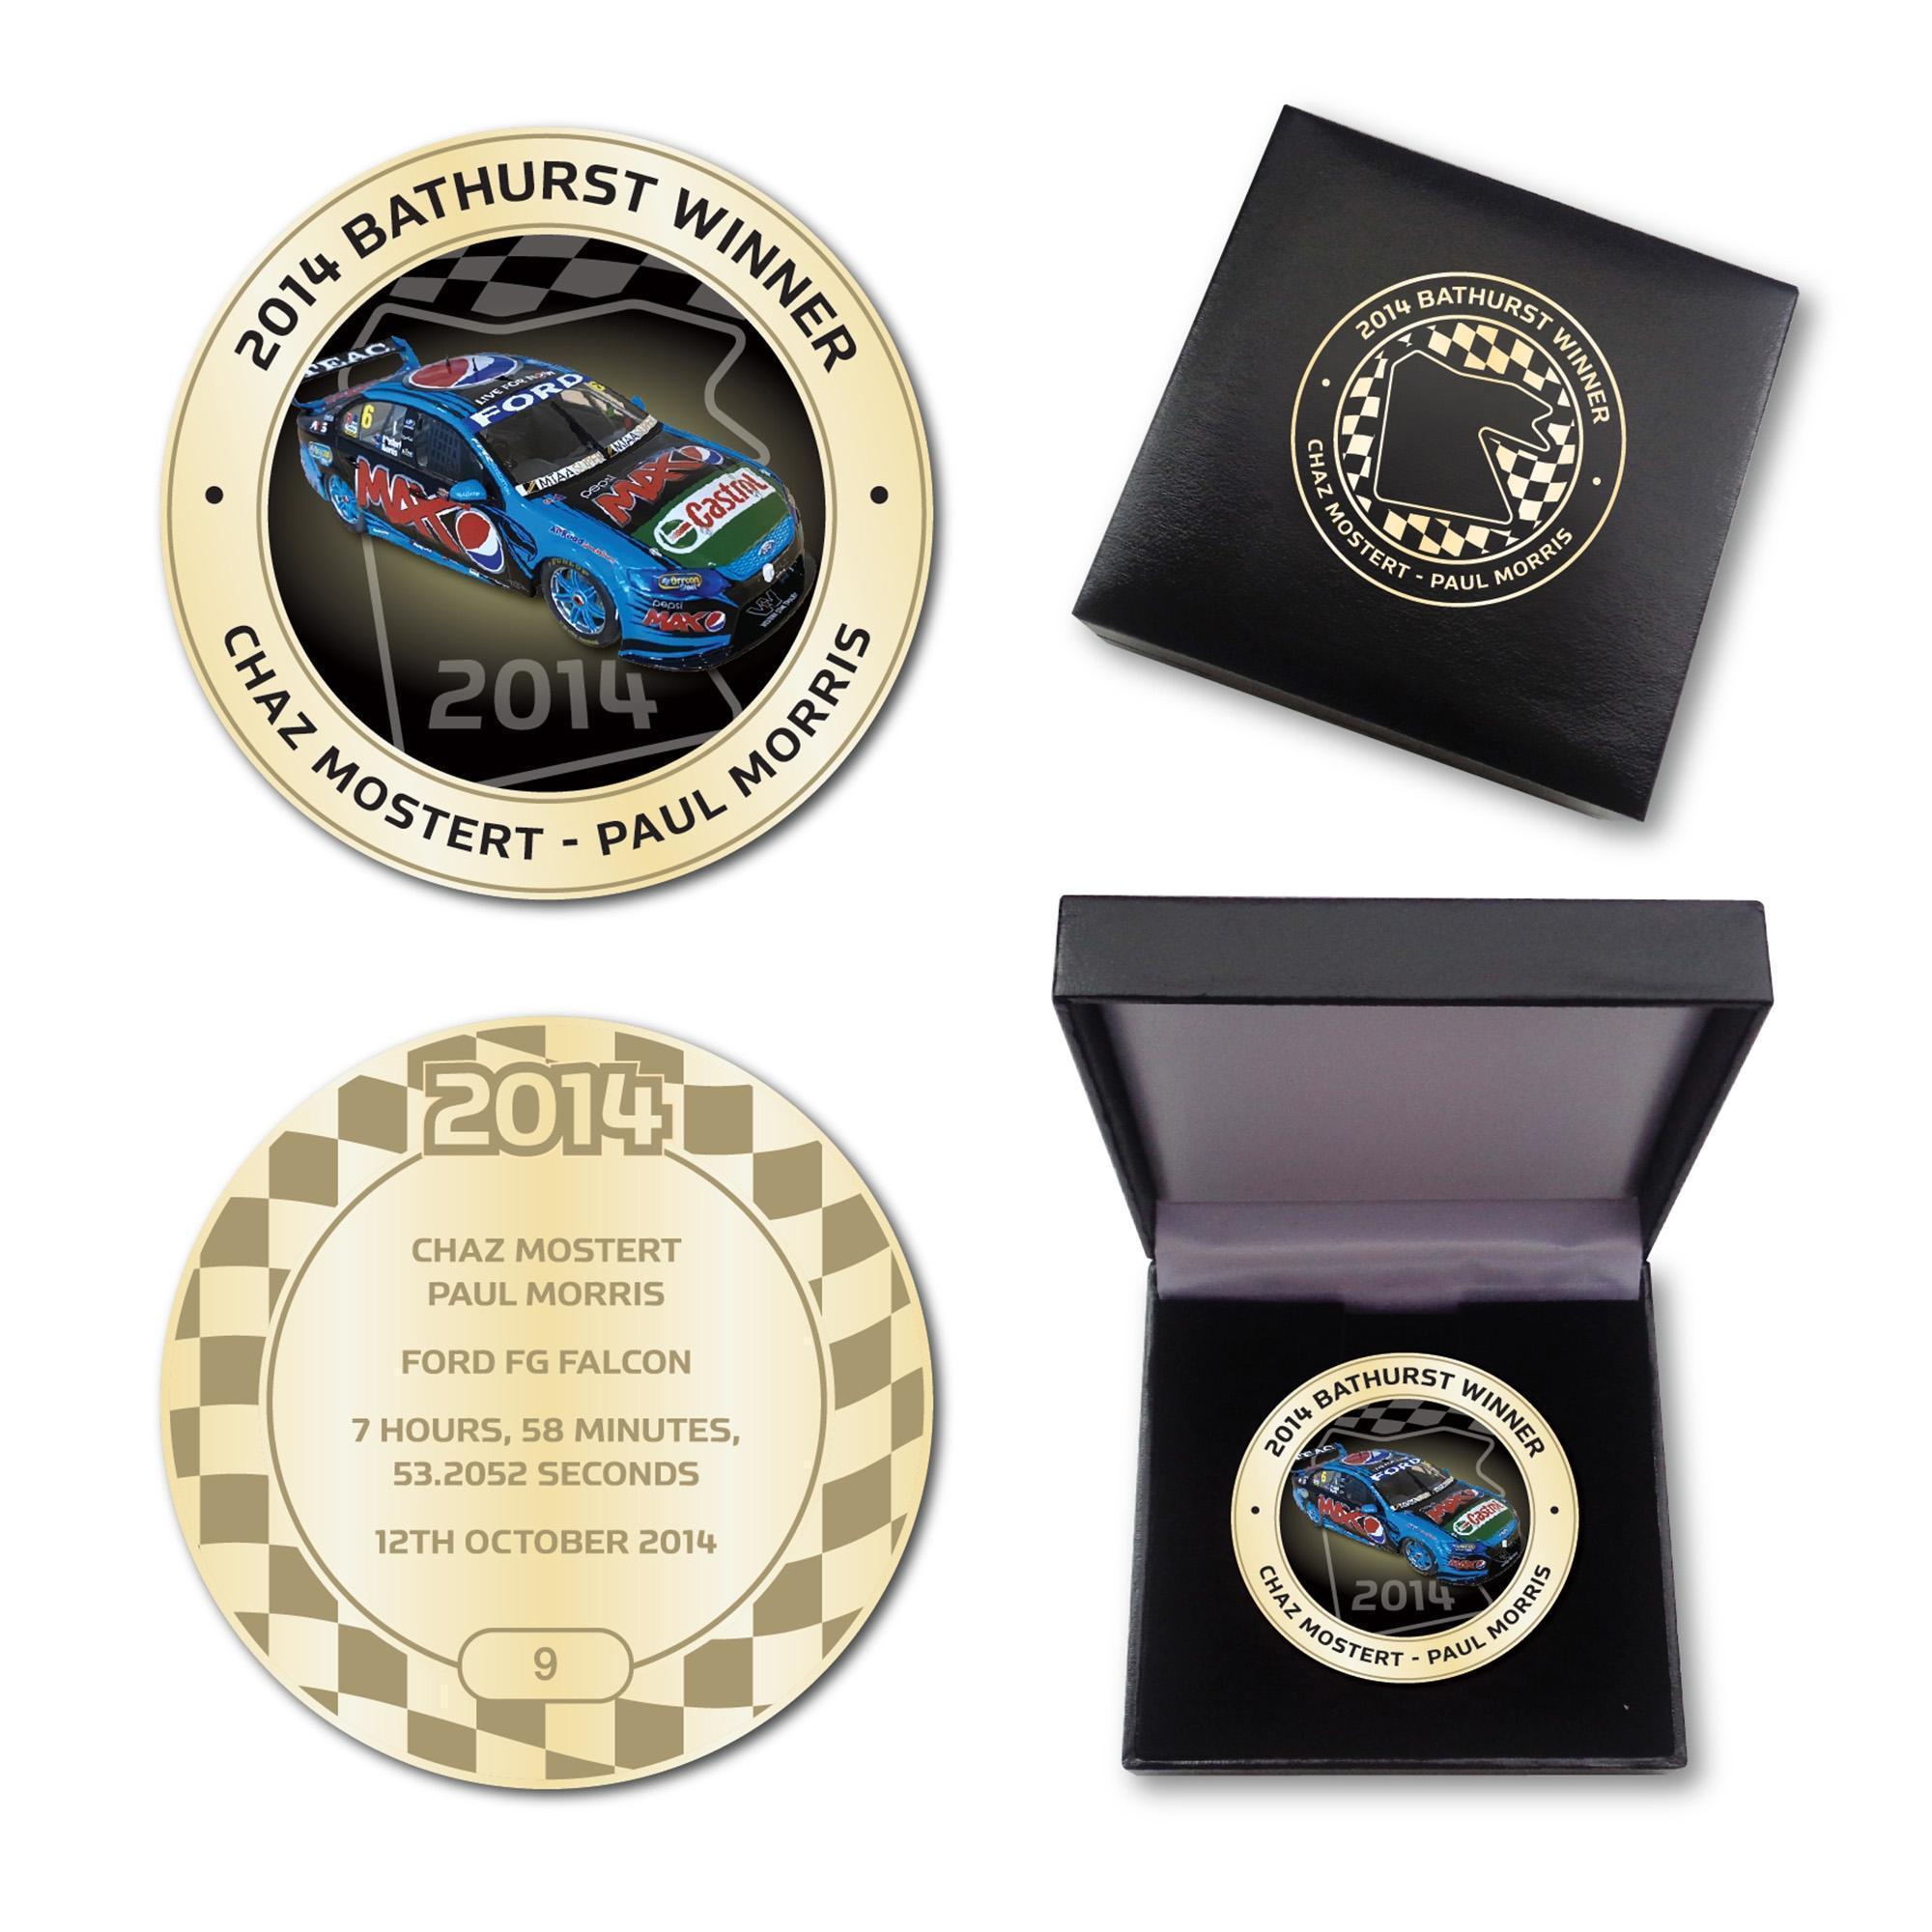 2014 Bathurst Winner Antique Gold Coloured Medallion In Box - Chaz Mostert Paul Morris Ford FG Falcon